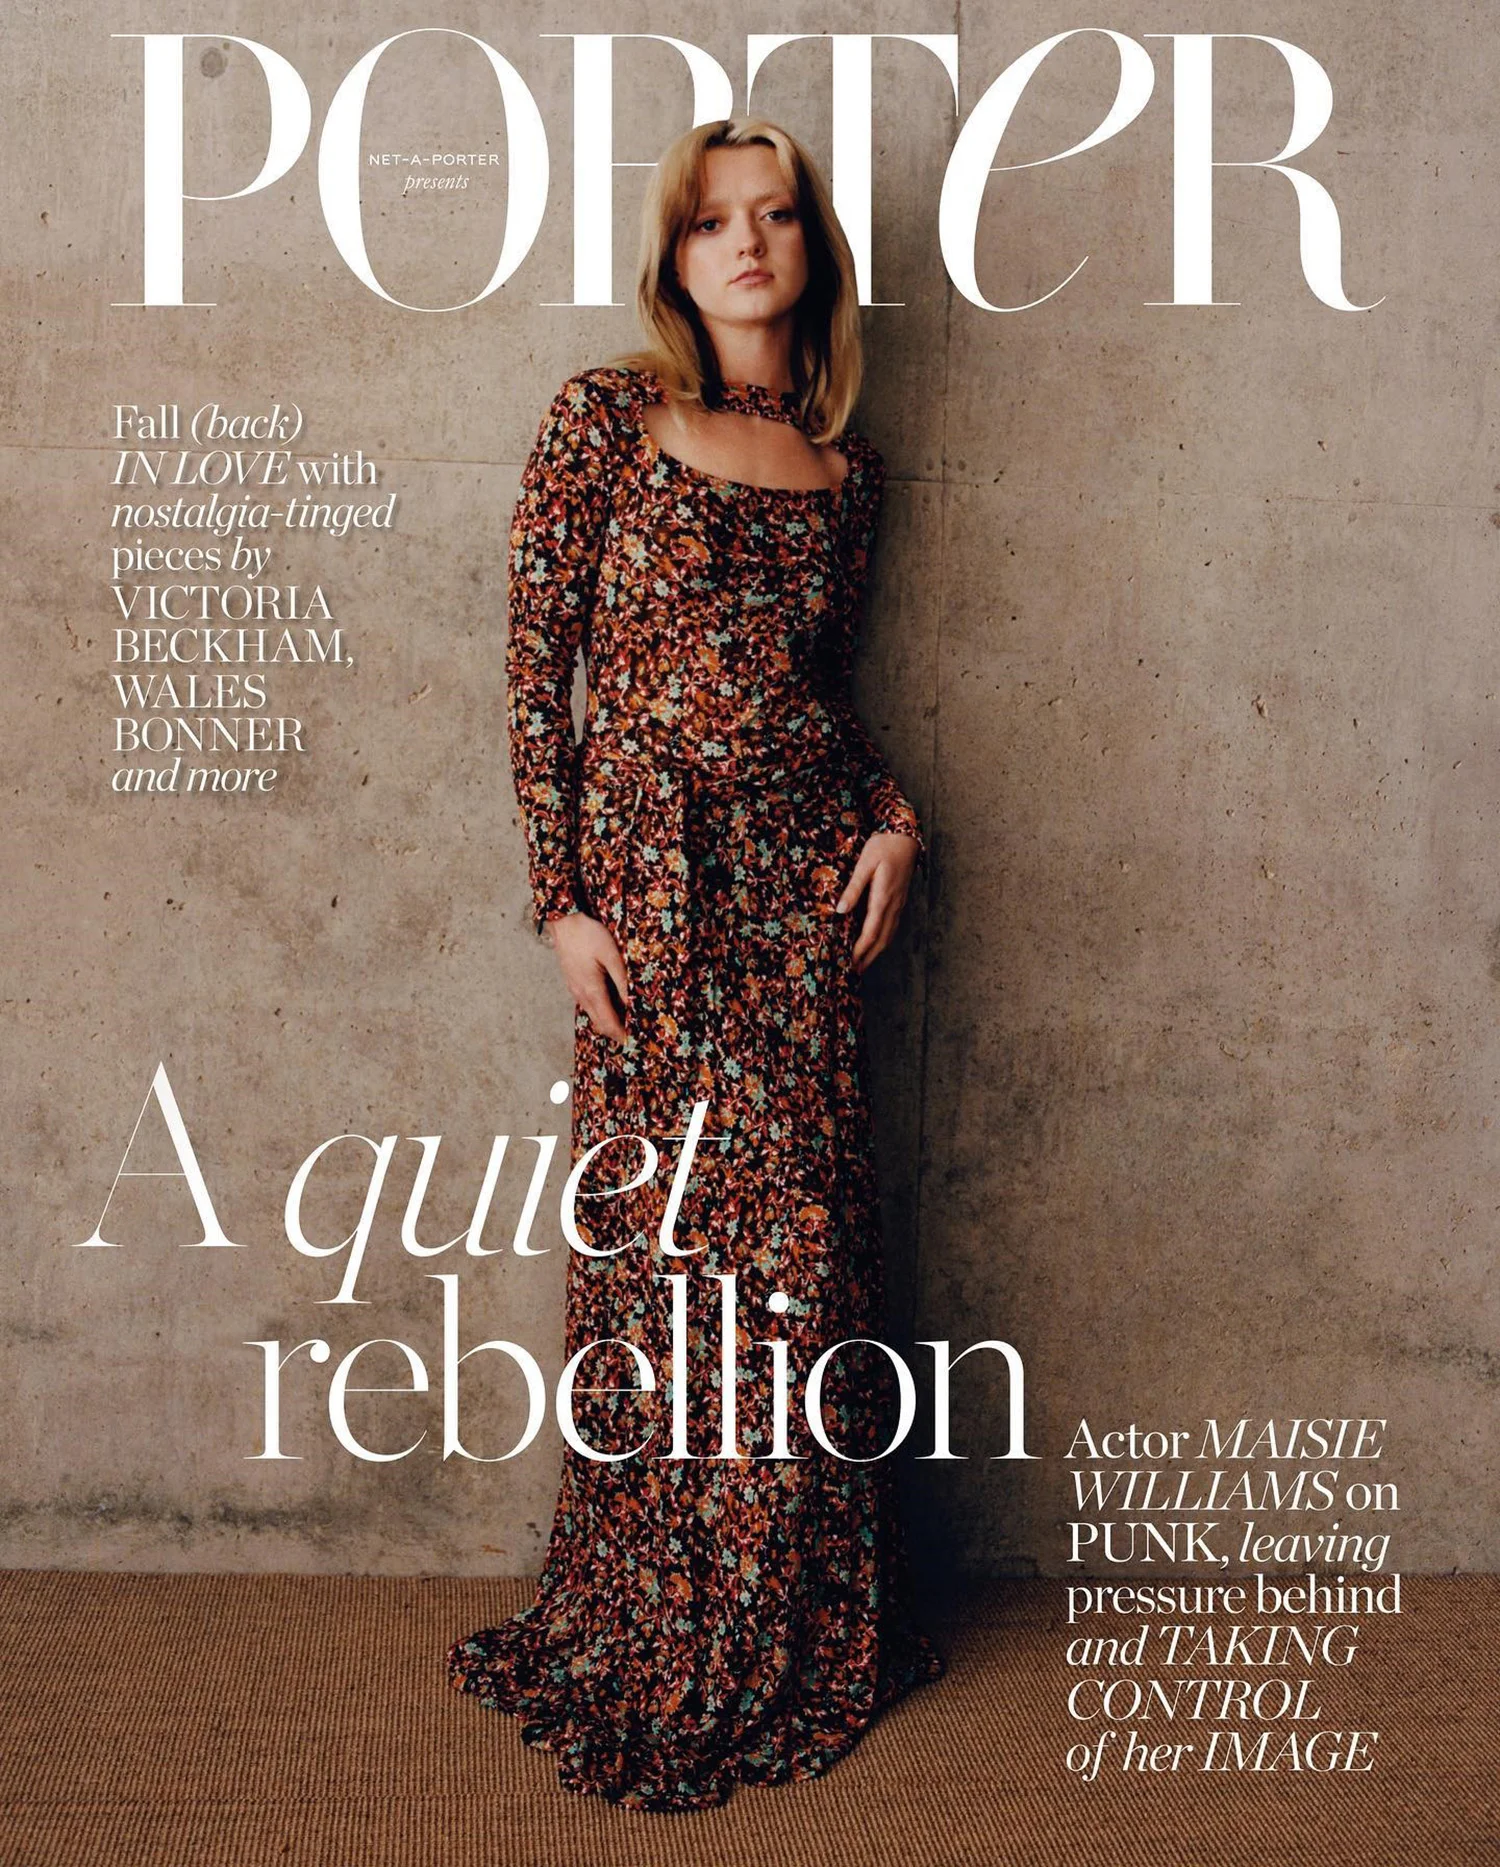 Maisie Williams covers Porter Magazine April 18th, 2022 by Luca Campri